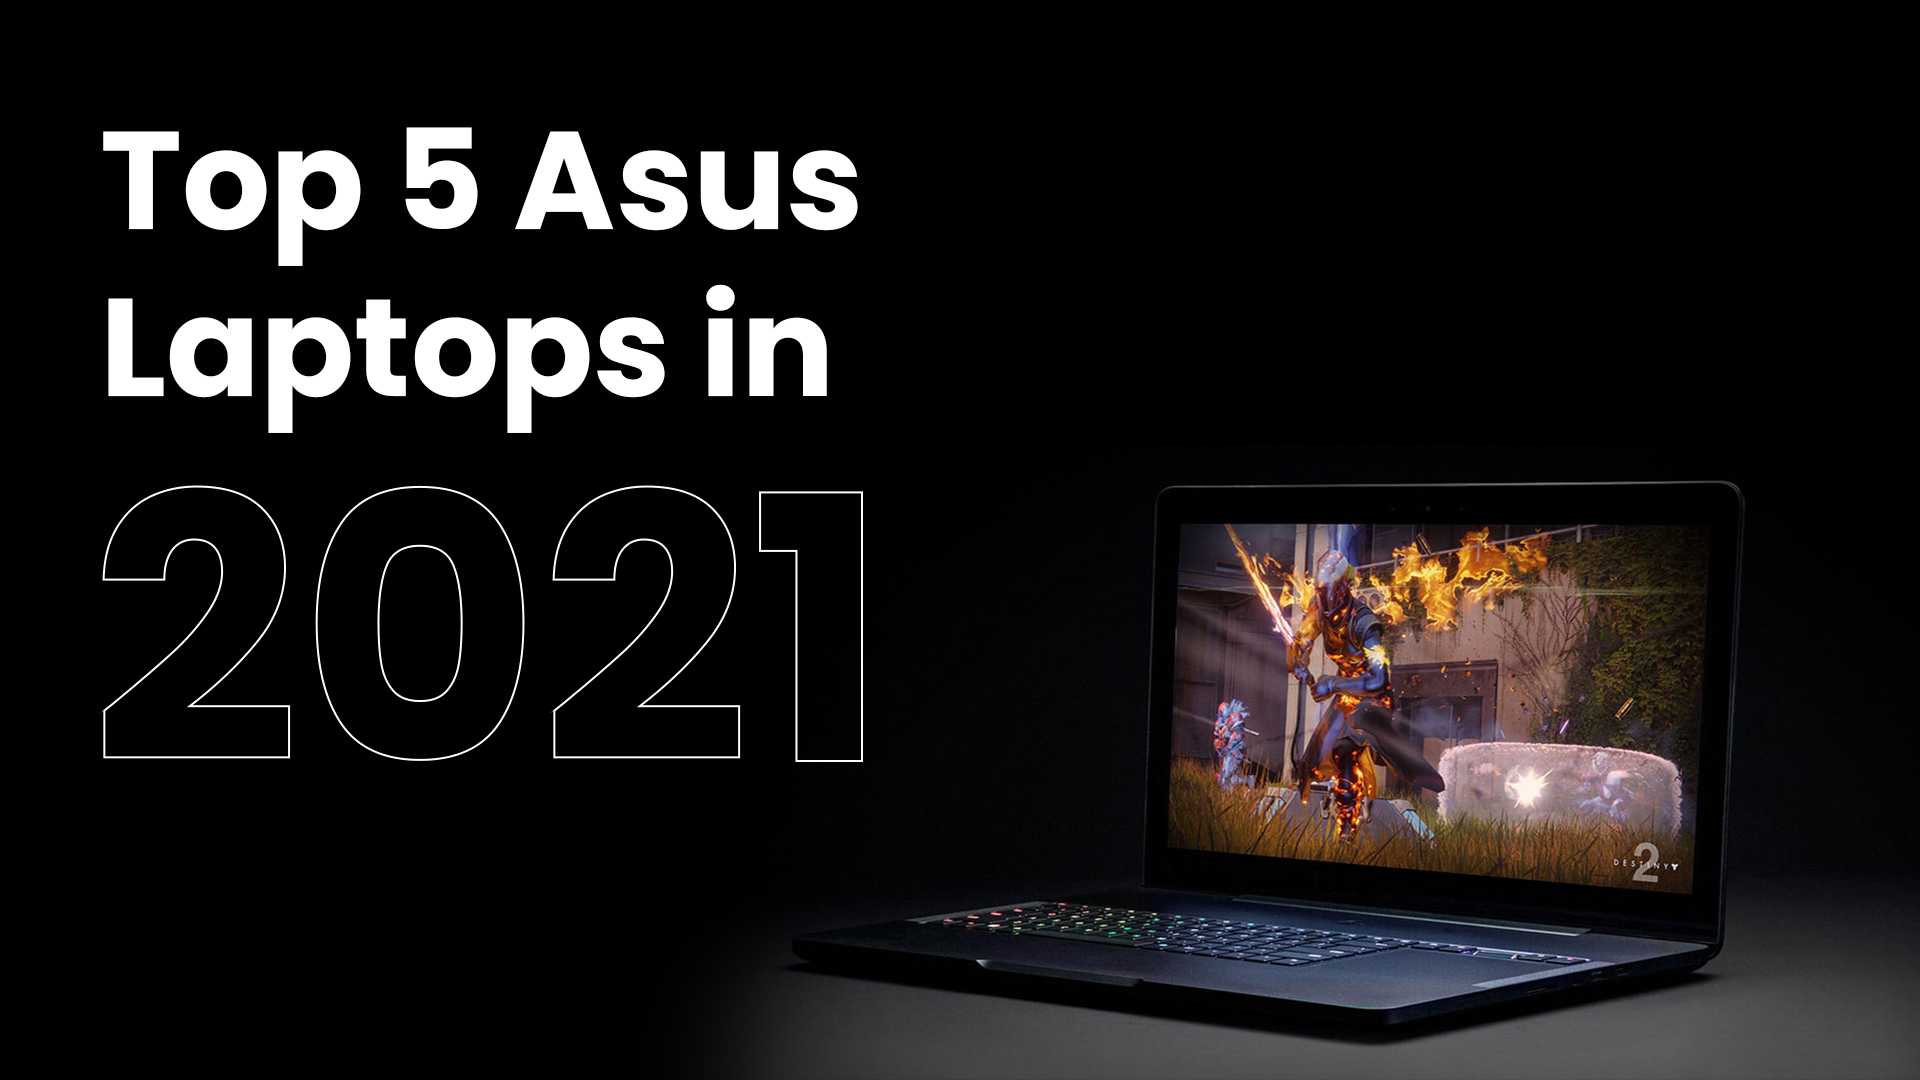 Top 5 Asus Laptops in 2021